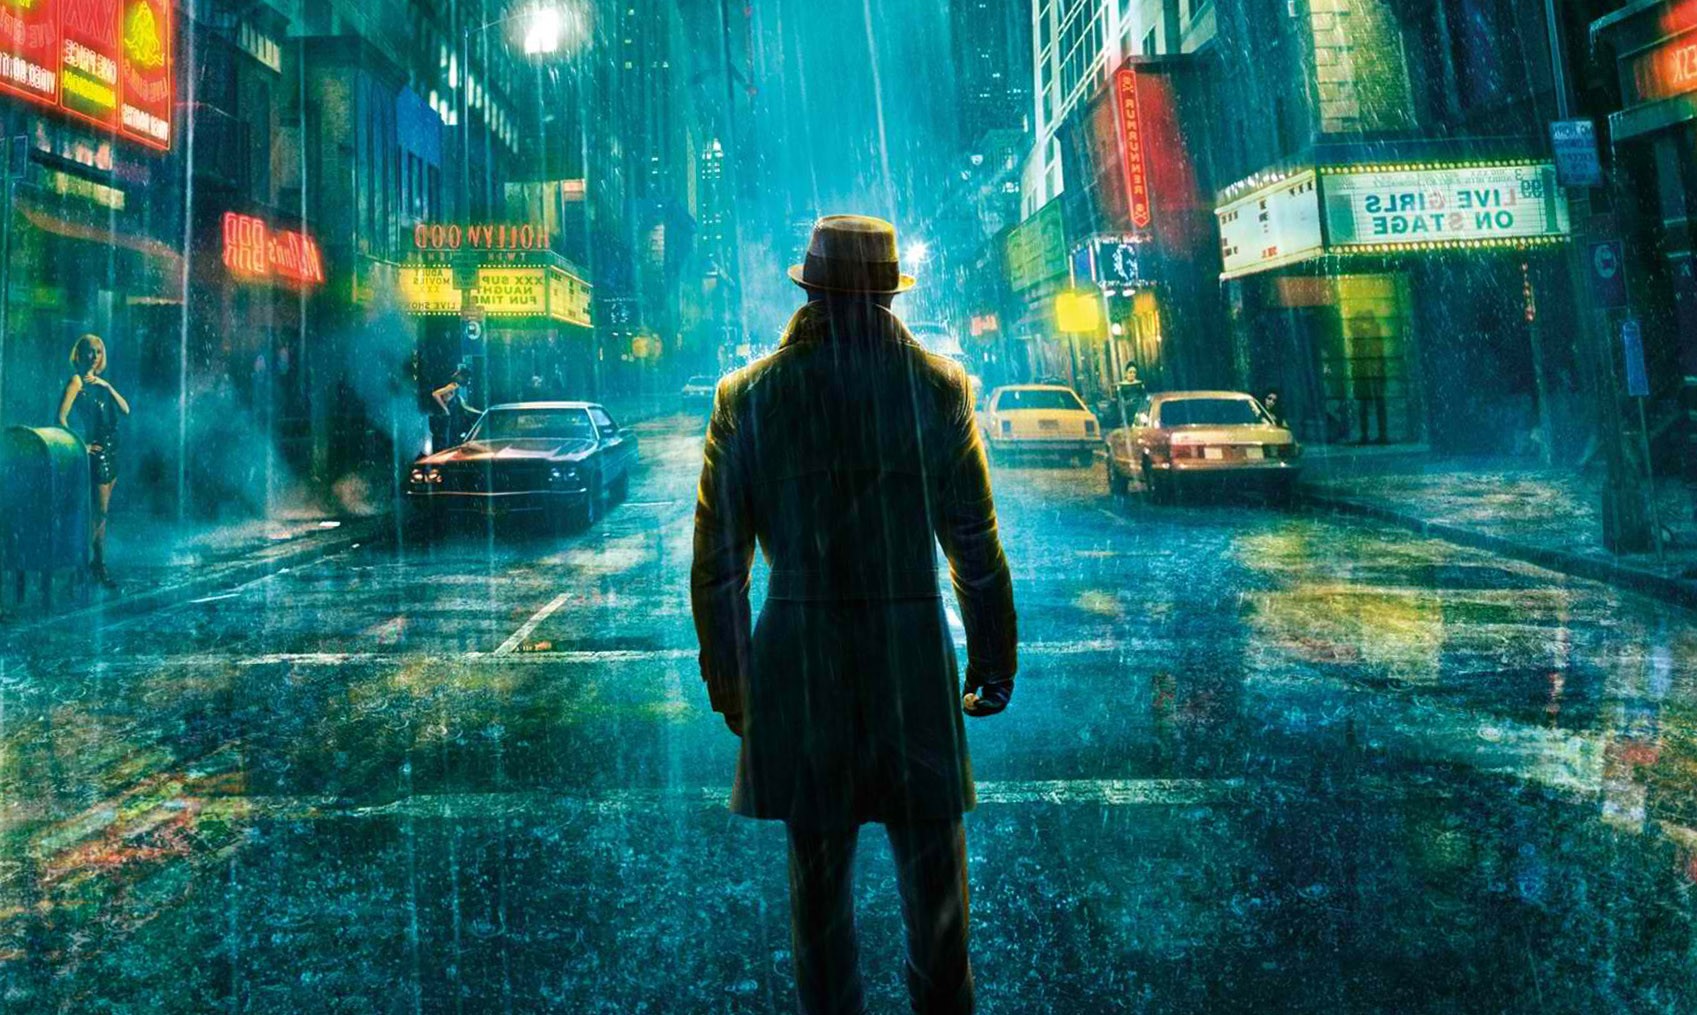 hero movie wallpaper,rain,urban area,darkness,street,adaptation